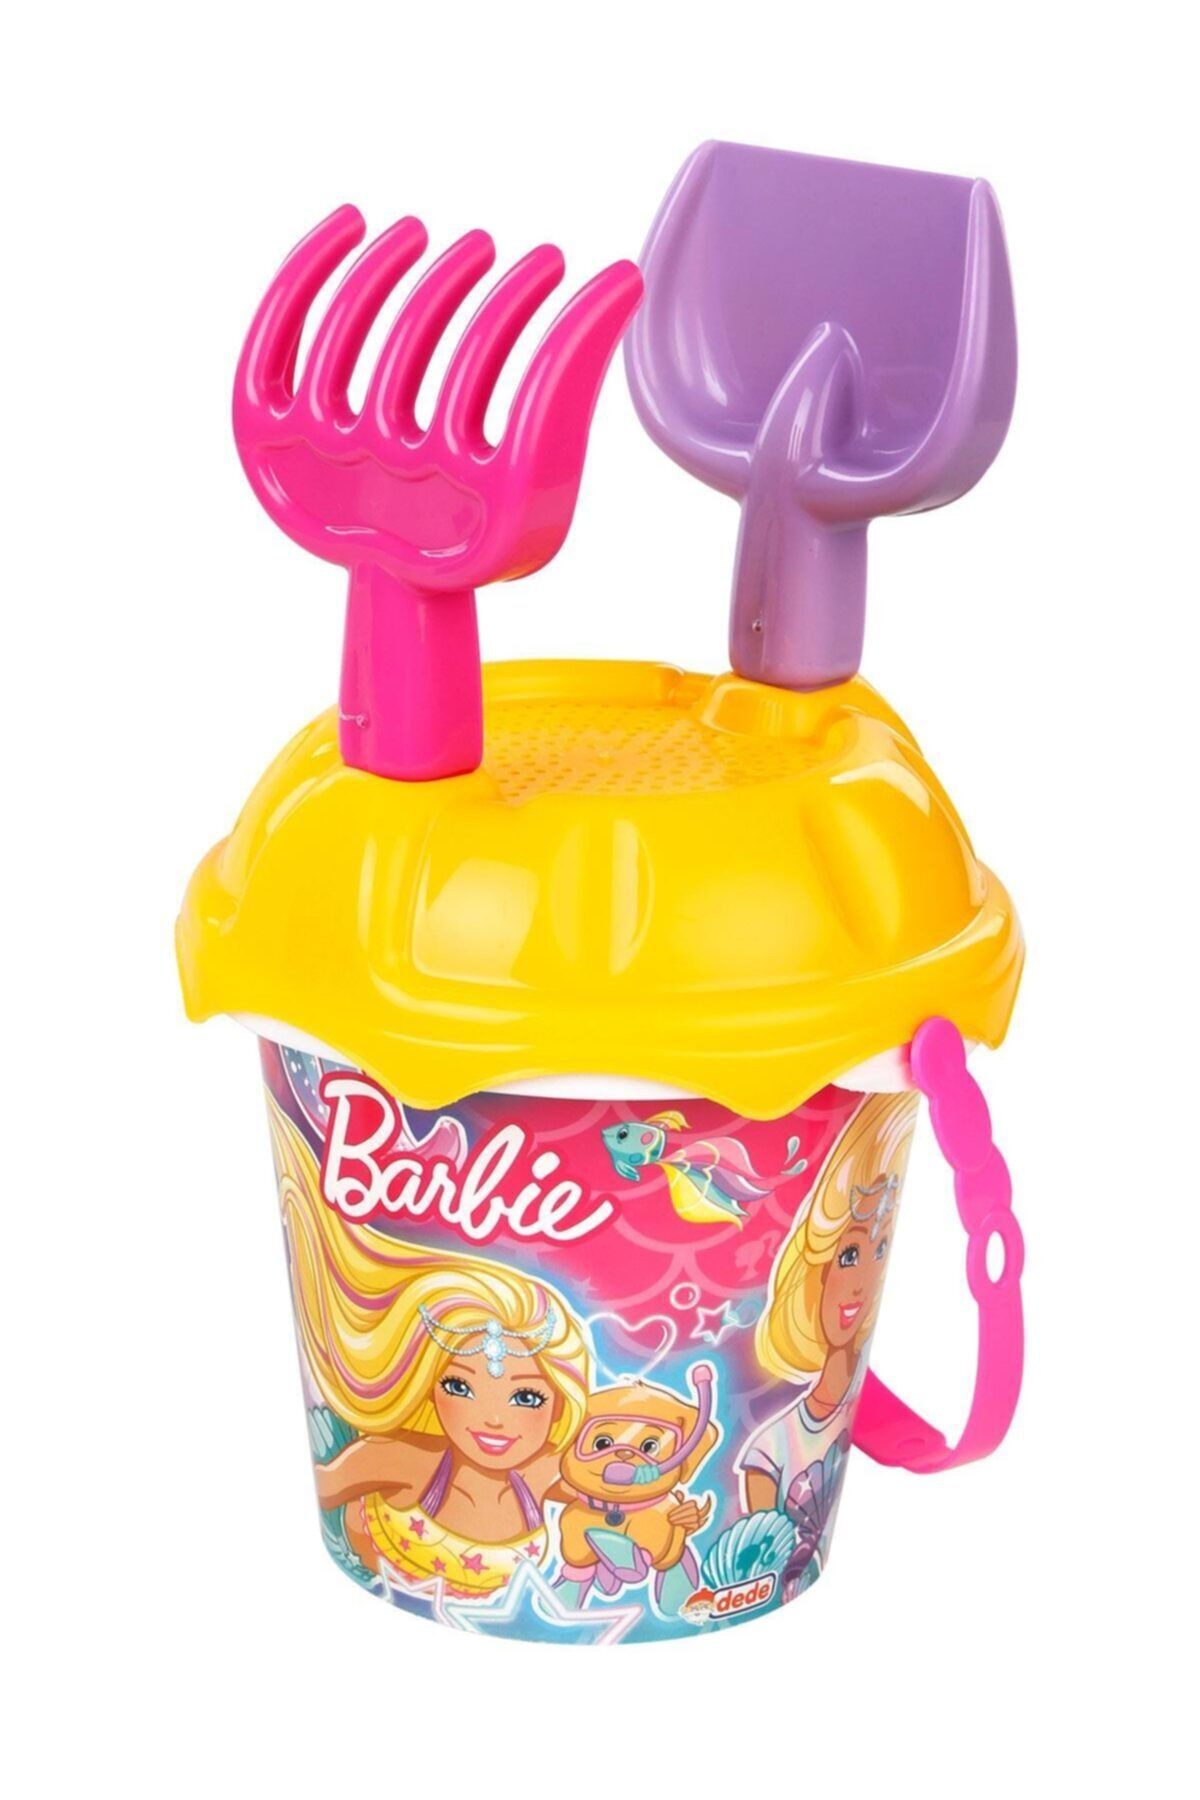 DEDE Oyuncak Barbie Küçük Kova Plaj Seti 01279